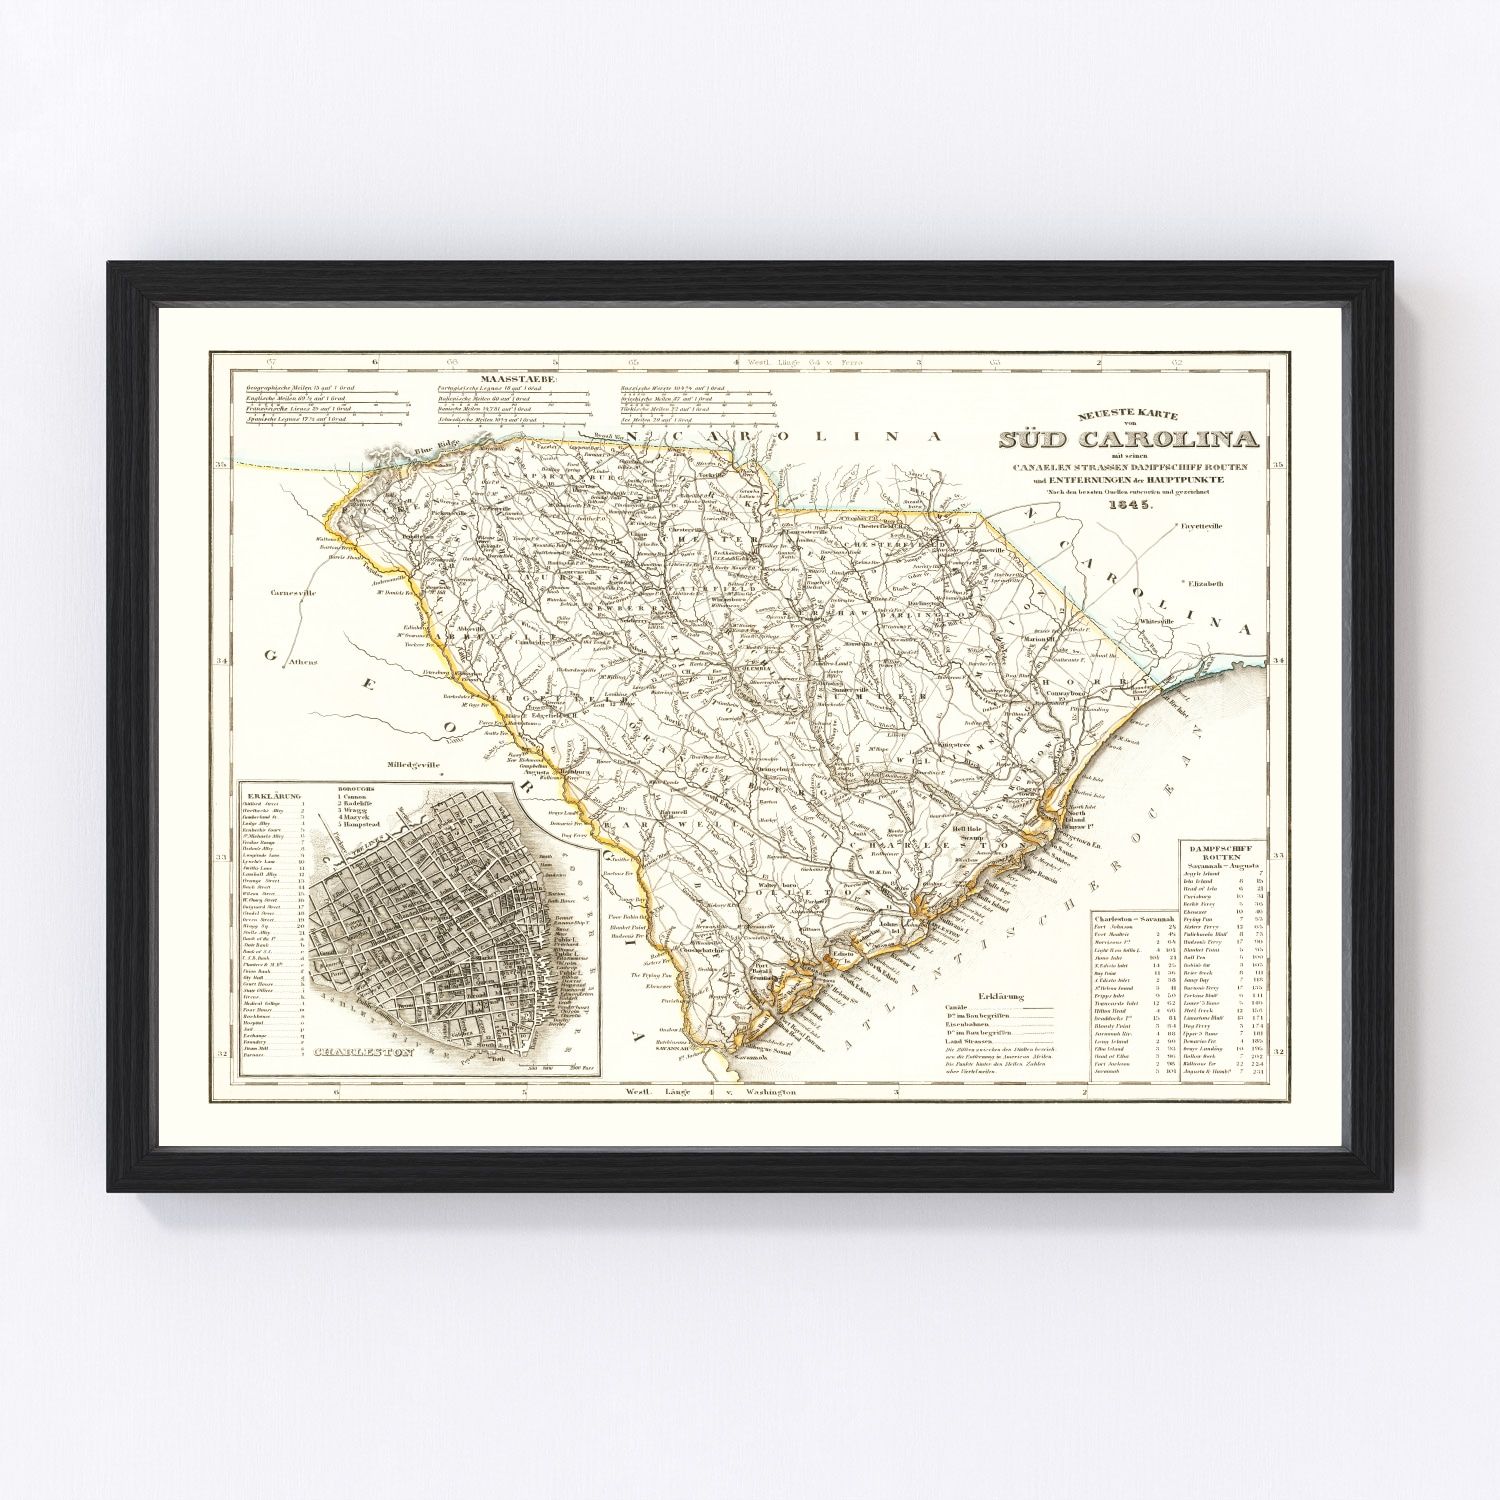 Vintage Map Of South Carolina 1845 By Teds Vintage Art